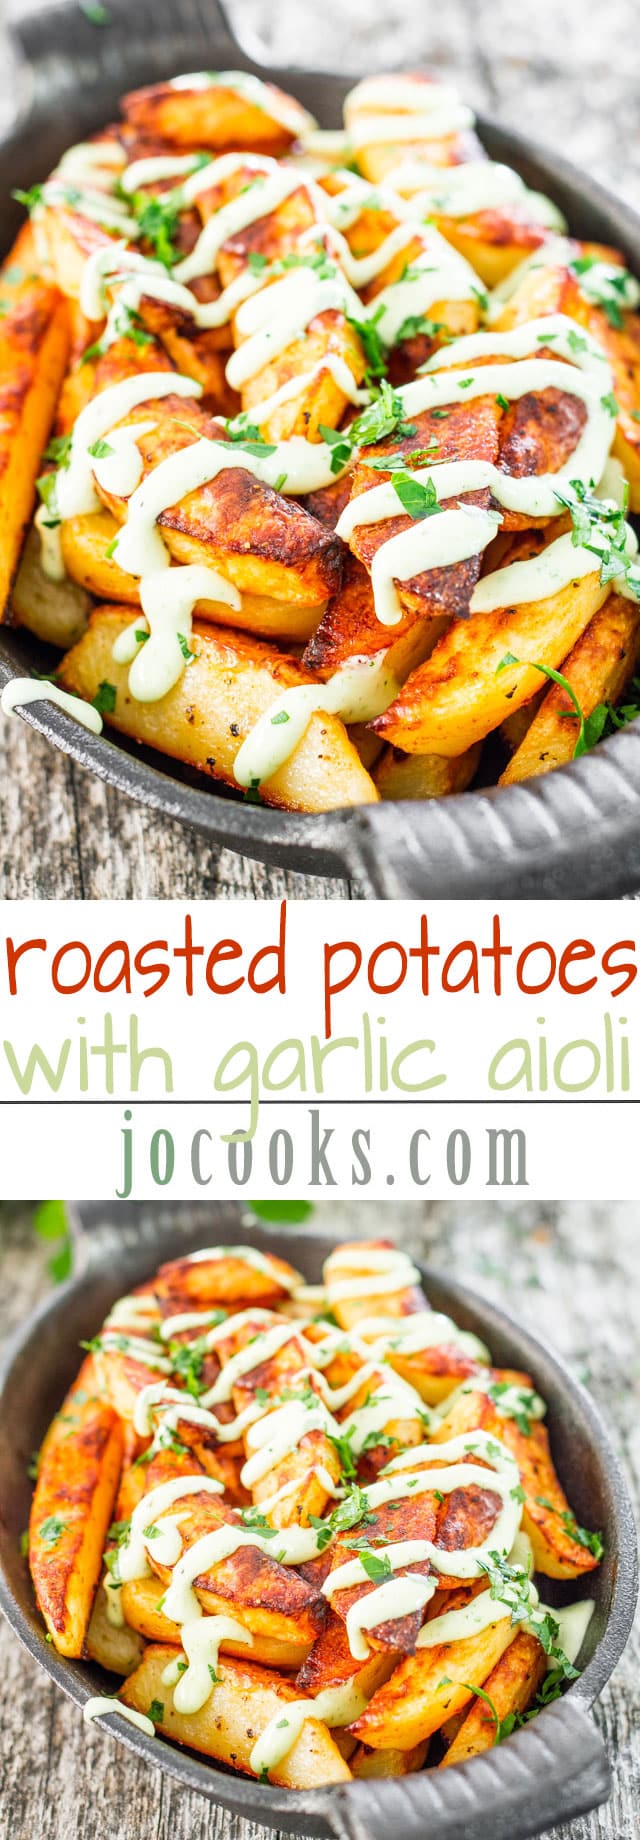 Roasted Potatoes with Garlic Aioli photo collage